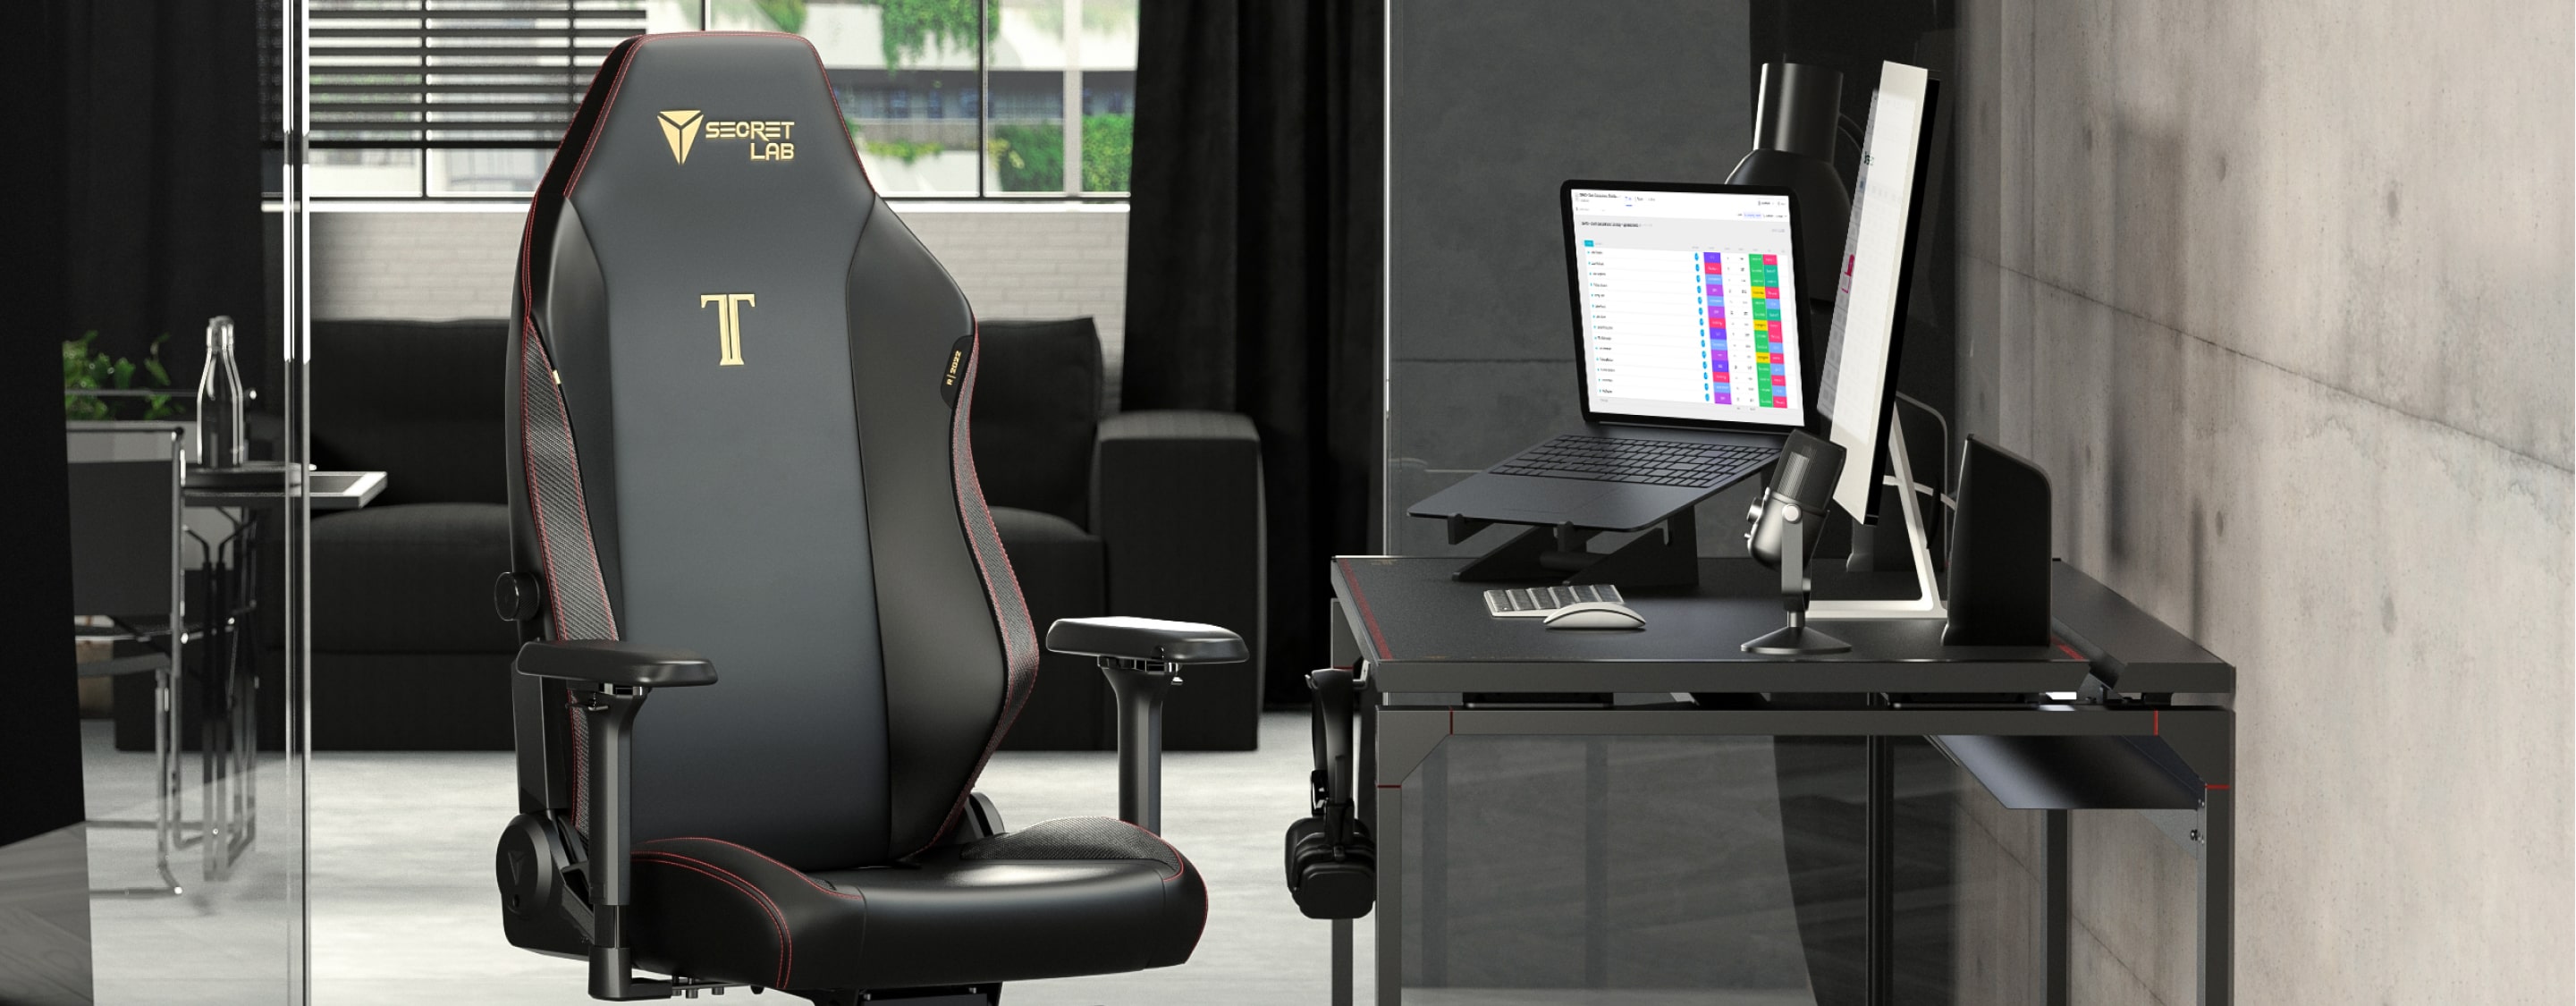 Play the ultimate dress up with your Secretlab MAGNUS desk and TITAN Evo  gaming chair - Secretlab Blog